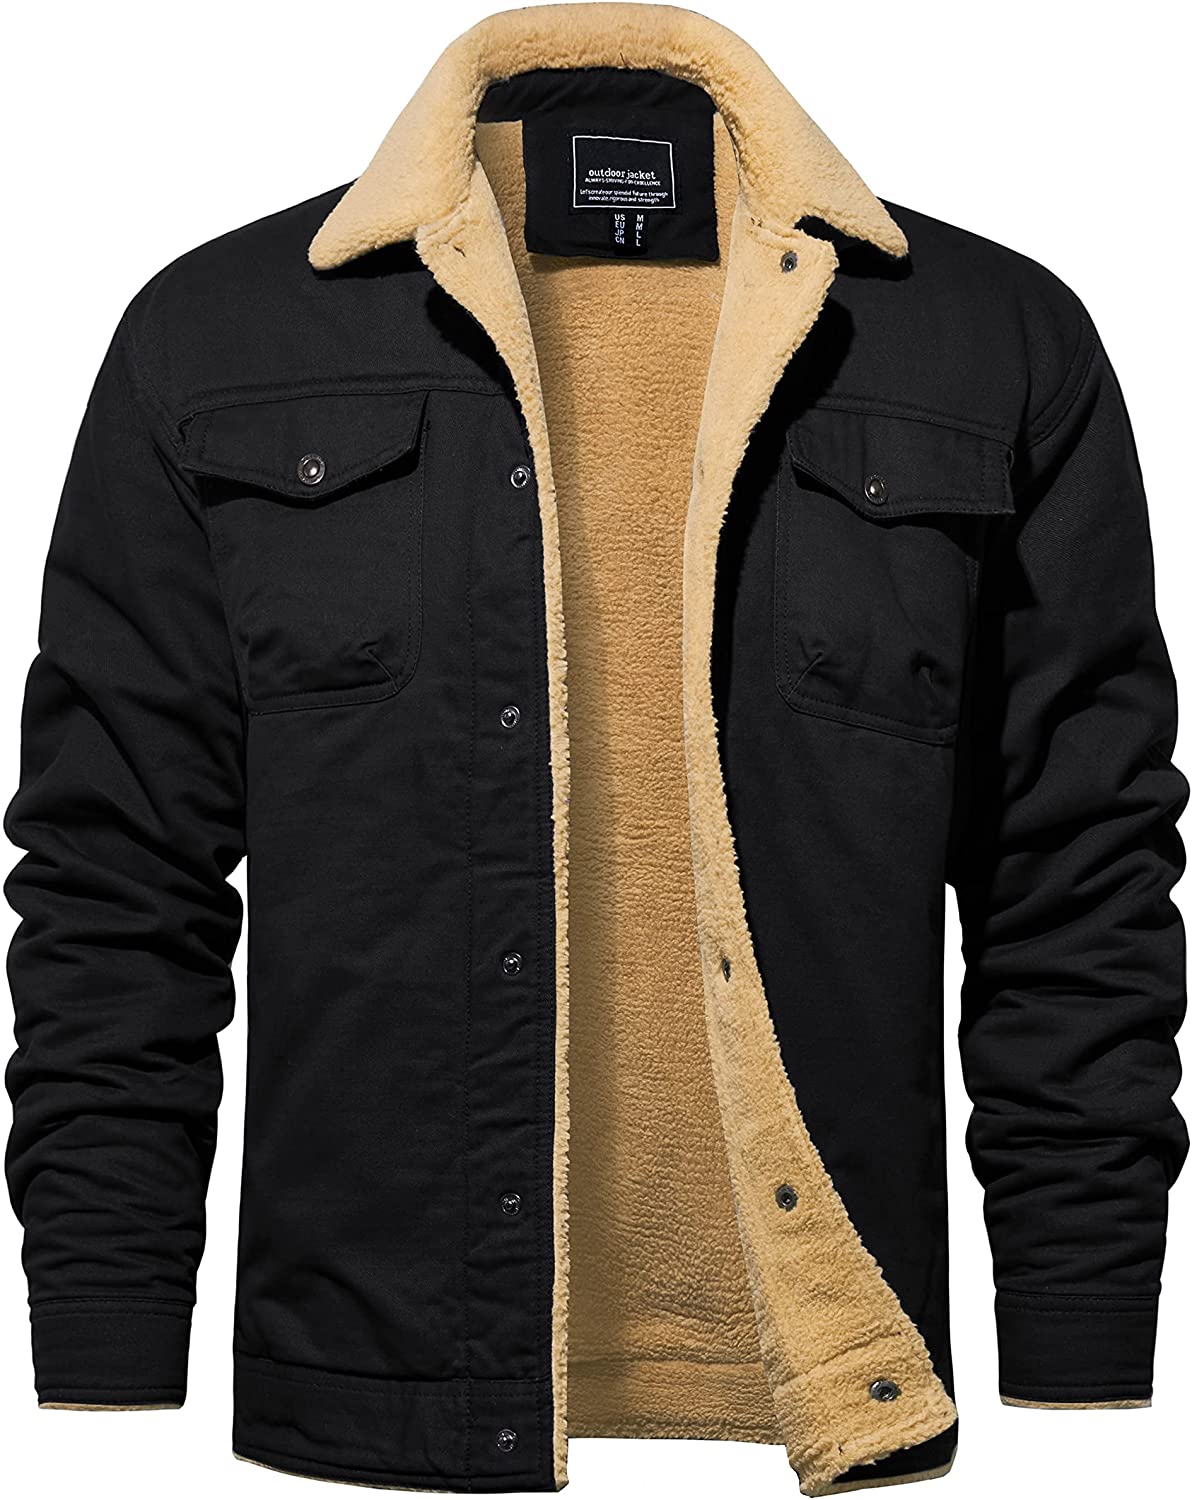 TACVASEN Men's Winter Vests Sleeveless Jackets Casual Outerwear Warm ...